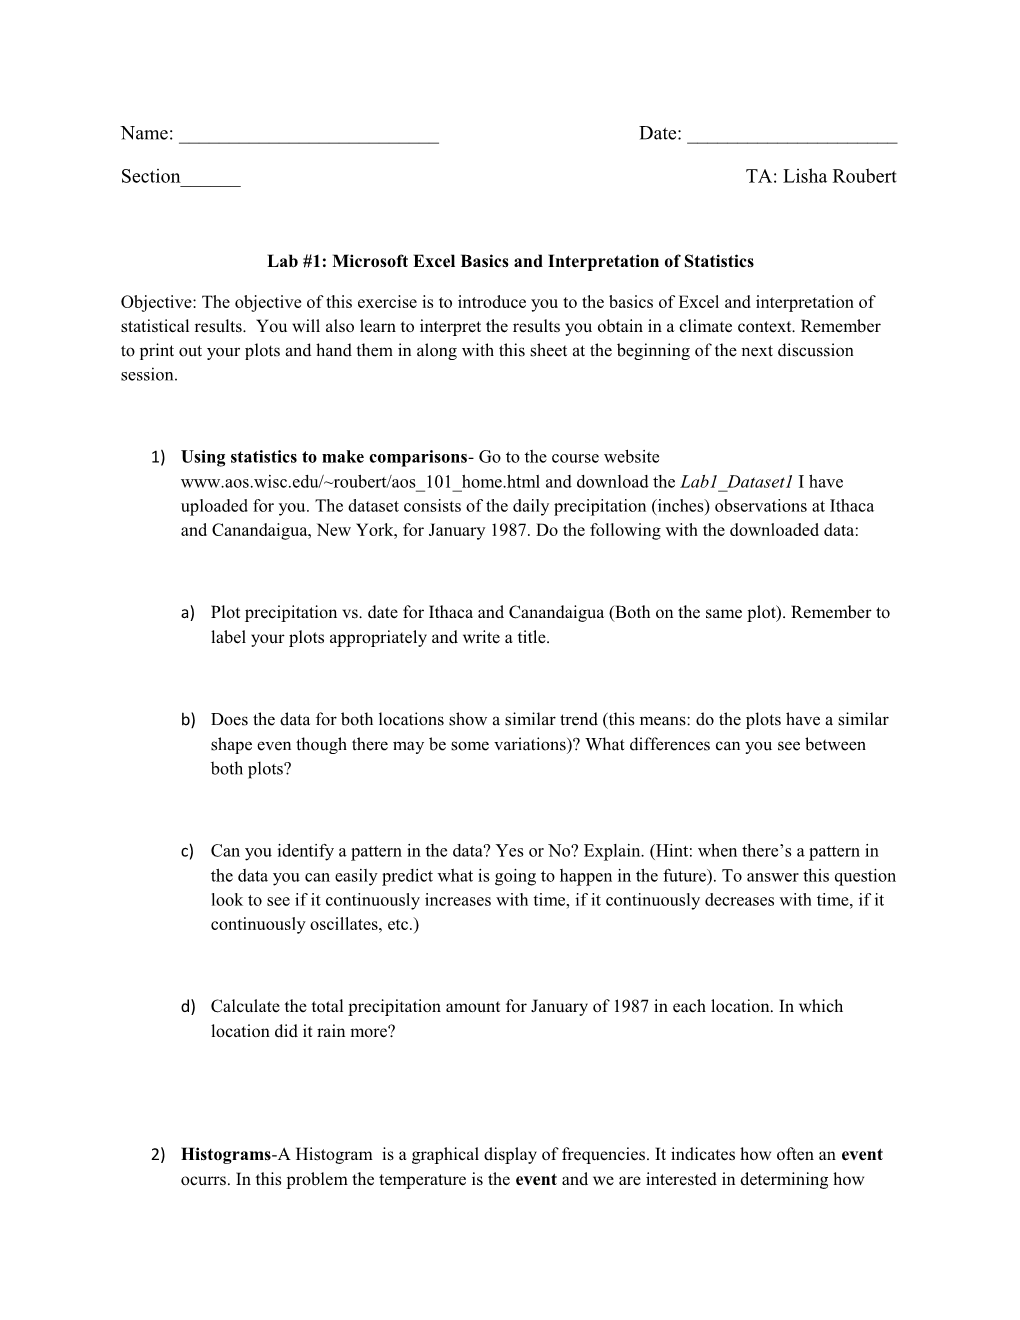 Lab #1: Microsoft Excel Basics and Interpretation of Statistics